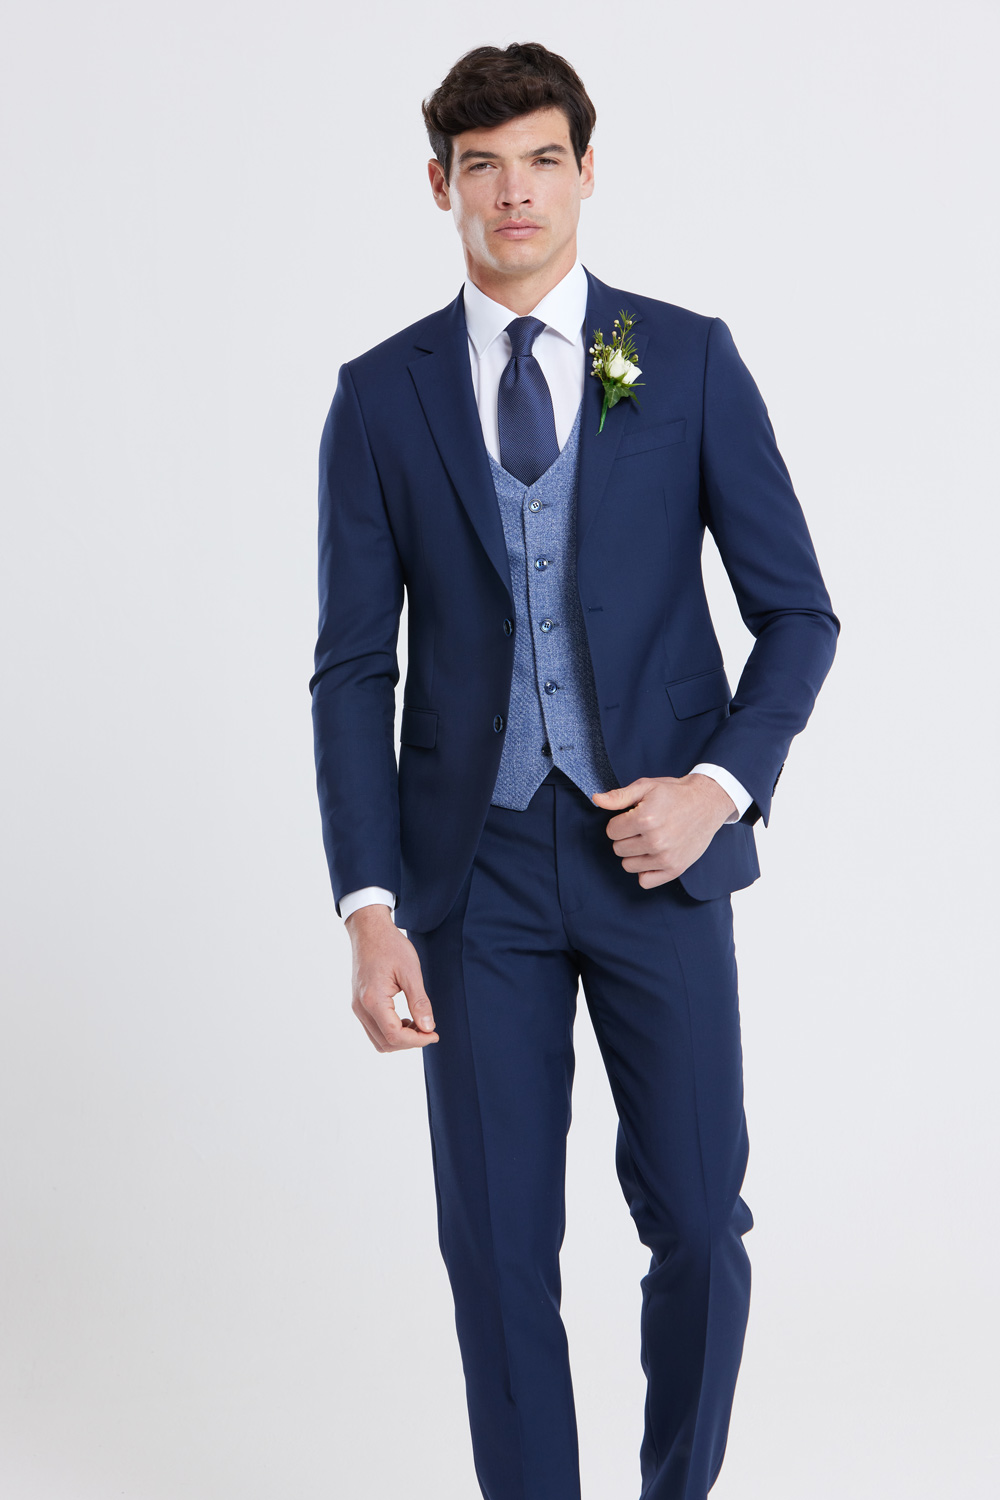 Simon Blue 3 Piece Wedding Suit - Tom Murphy's Formal and Menswear